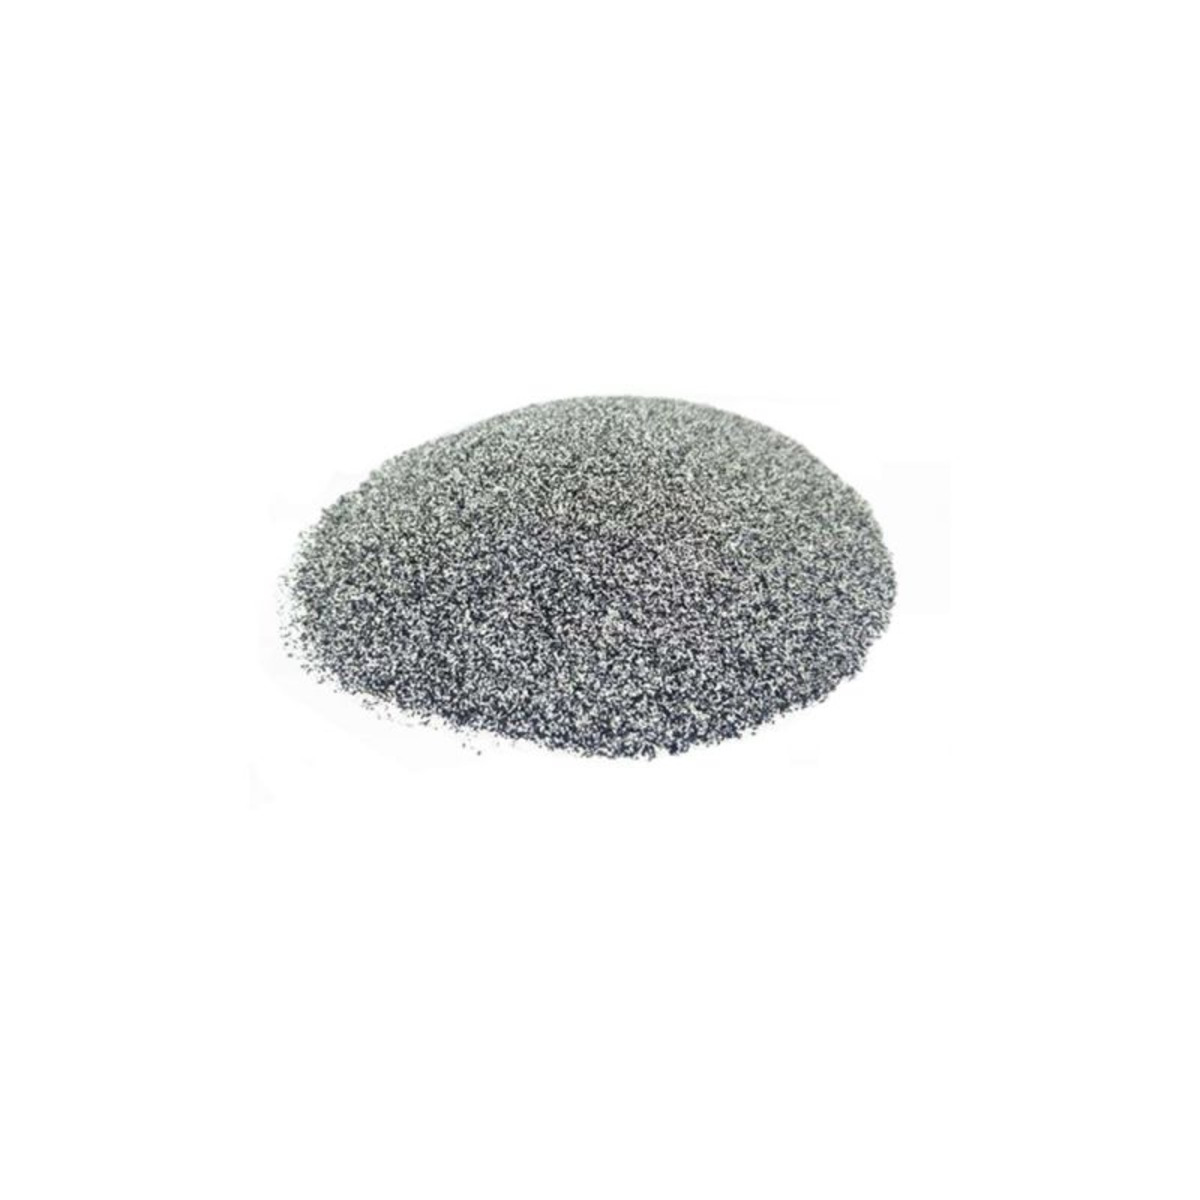 M2 Fishing Plastgum Powder Plasticizer For Ballast -  Light Sand - 100 g        